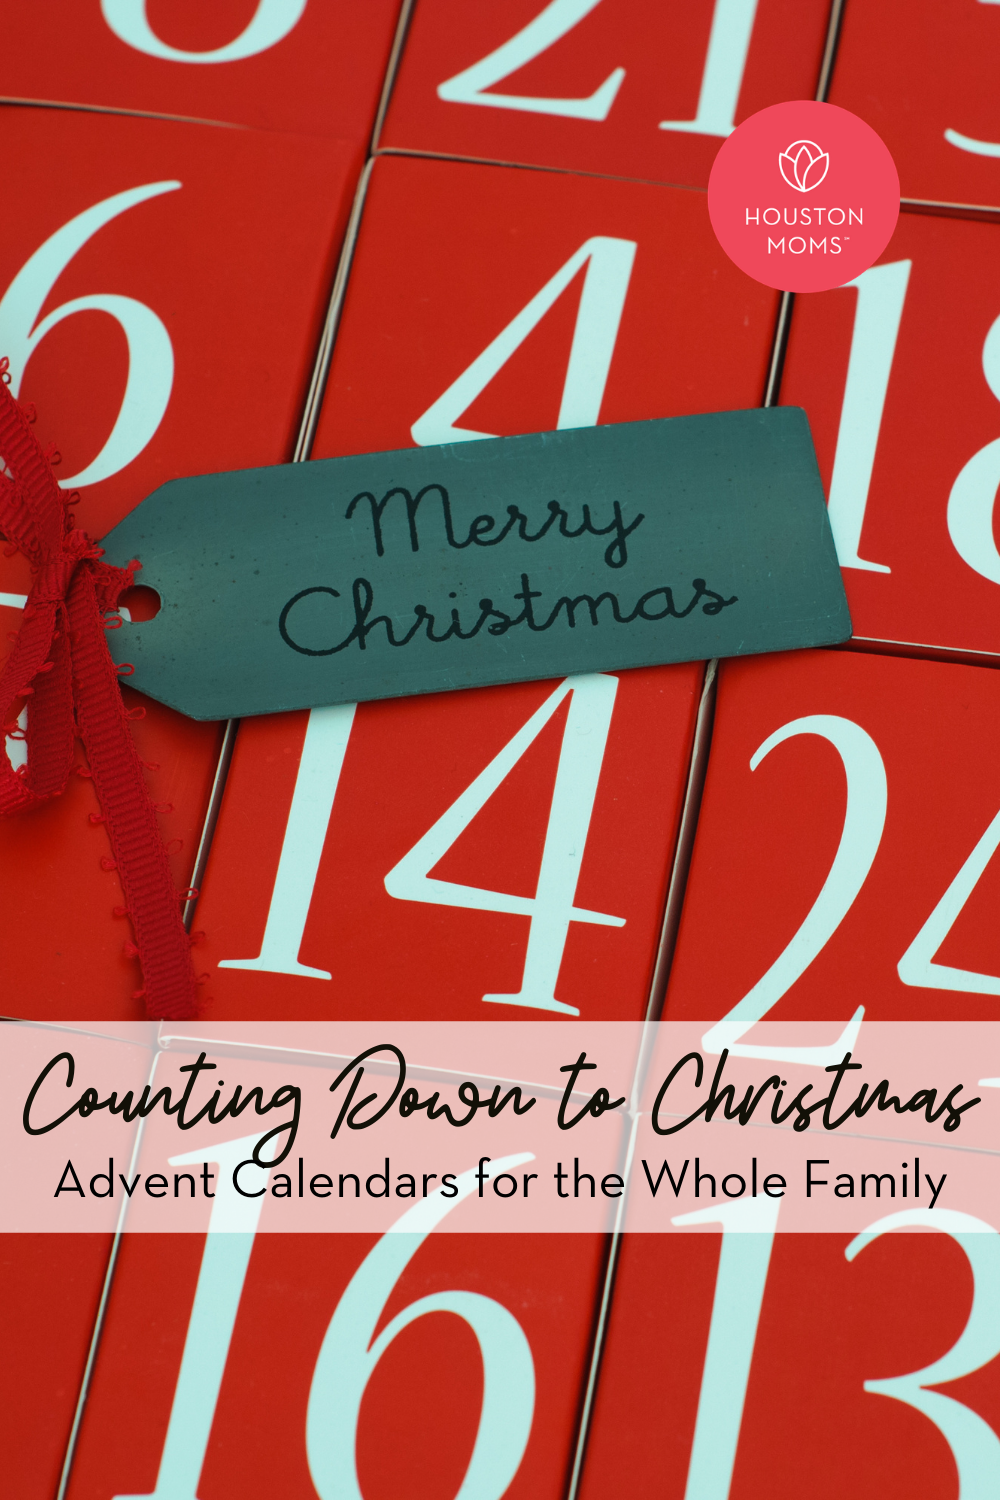 Houston Moms "Counting Down to Christmas:: Advent Calendars for the Whole Family" #houstonmoms #houstonmomsblog #momsaroundhouston